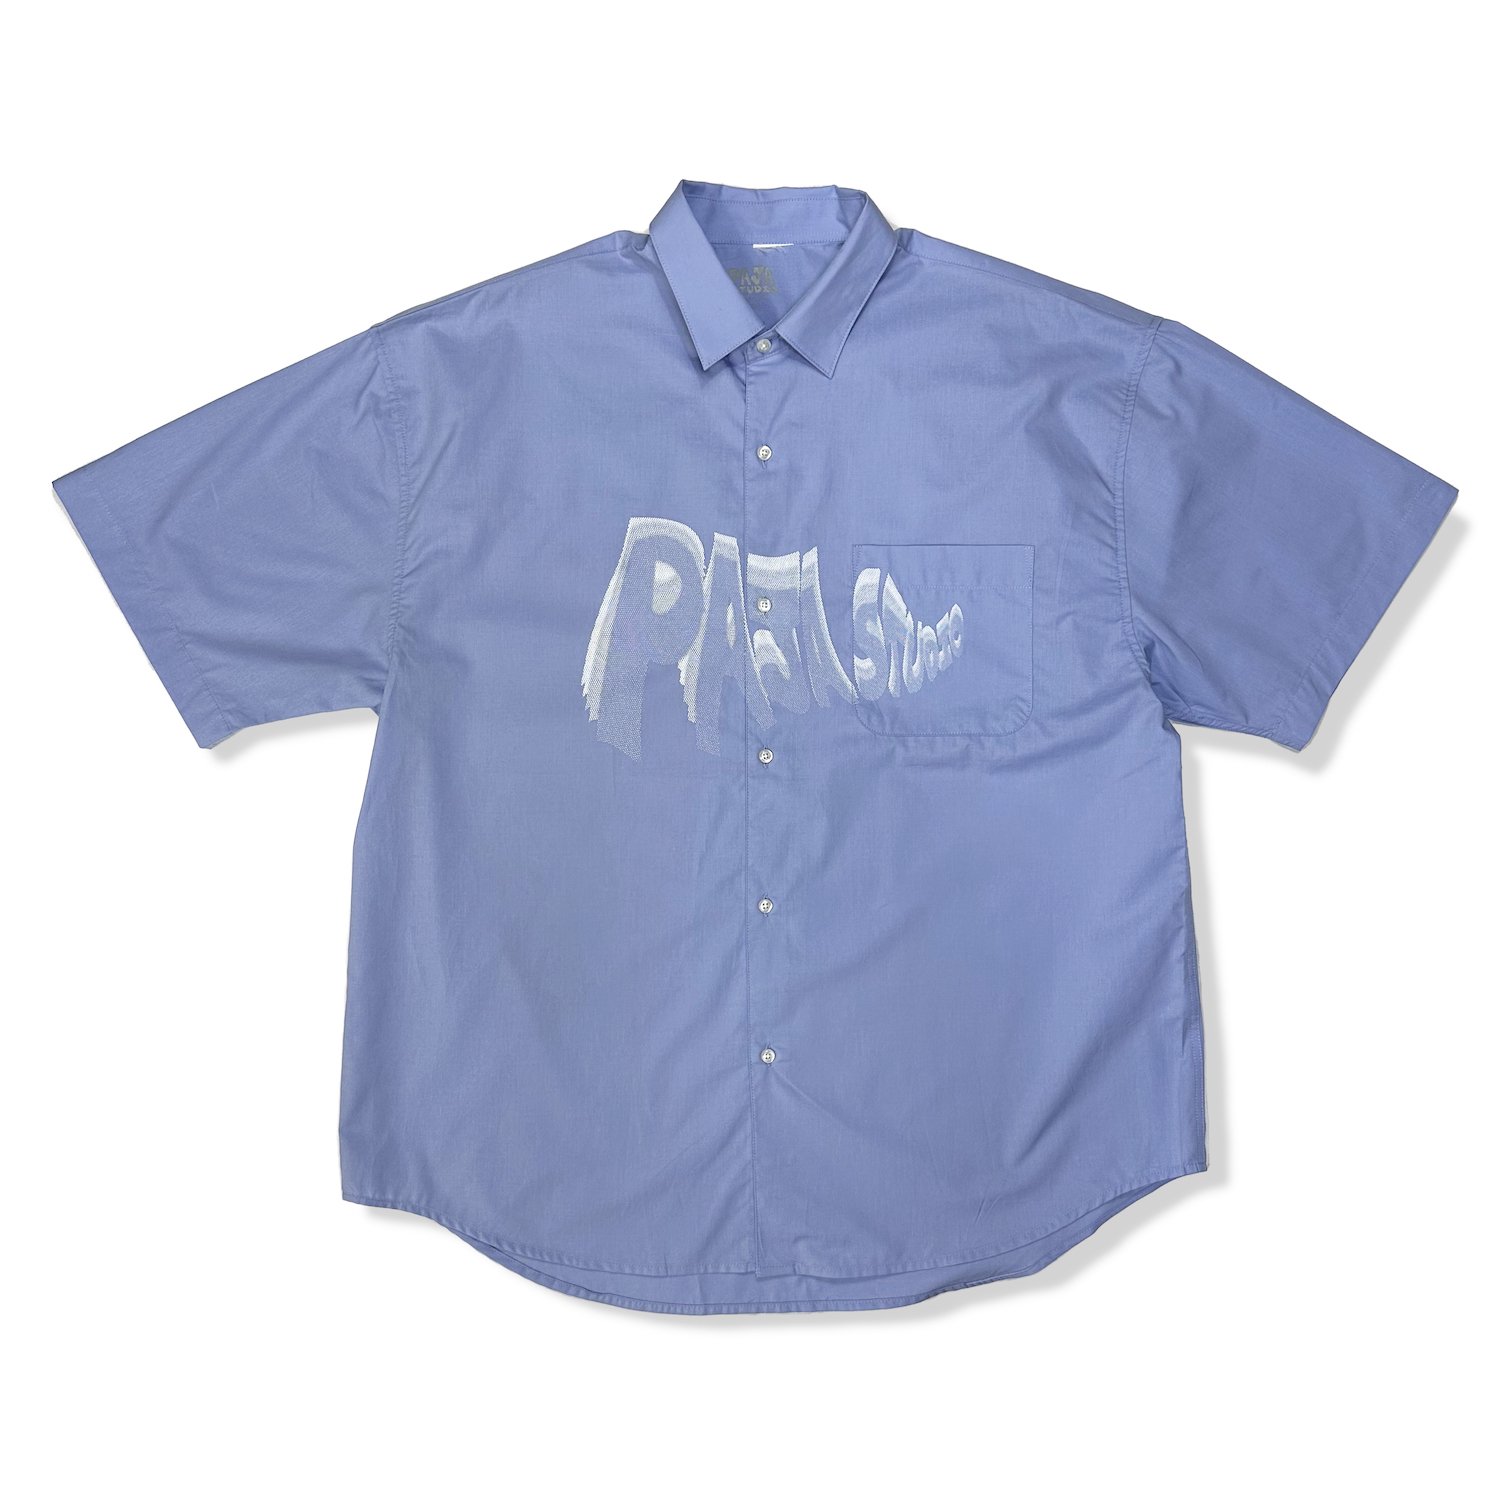 PAJA STUDIO<br>Appear Logo S/s Shirt<br>